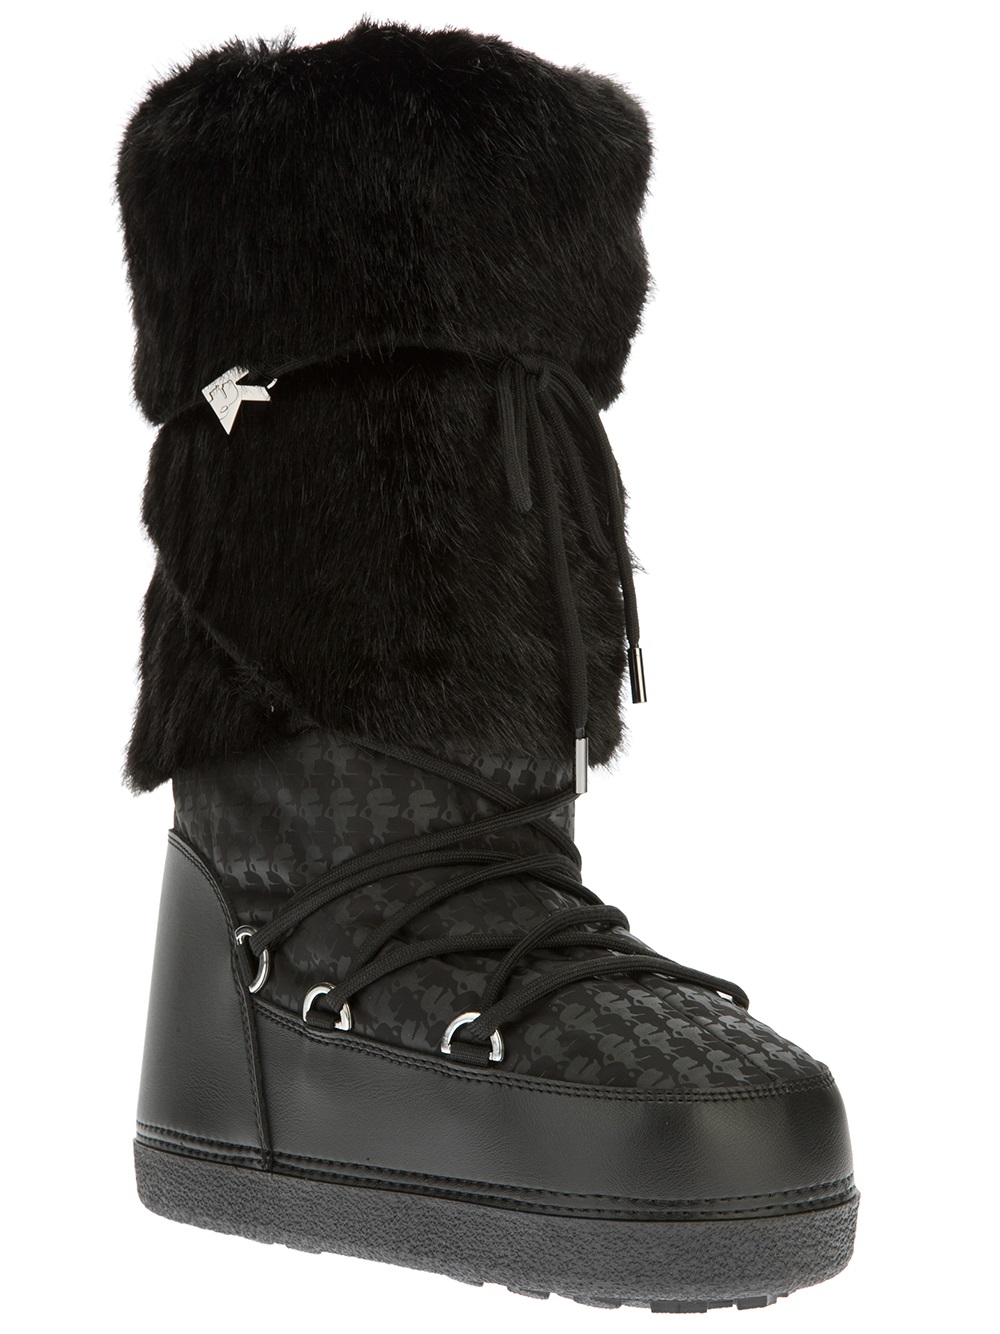 Lyst - Karl Lagerfeld Moon Boot in Black